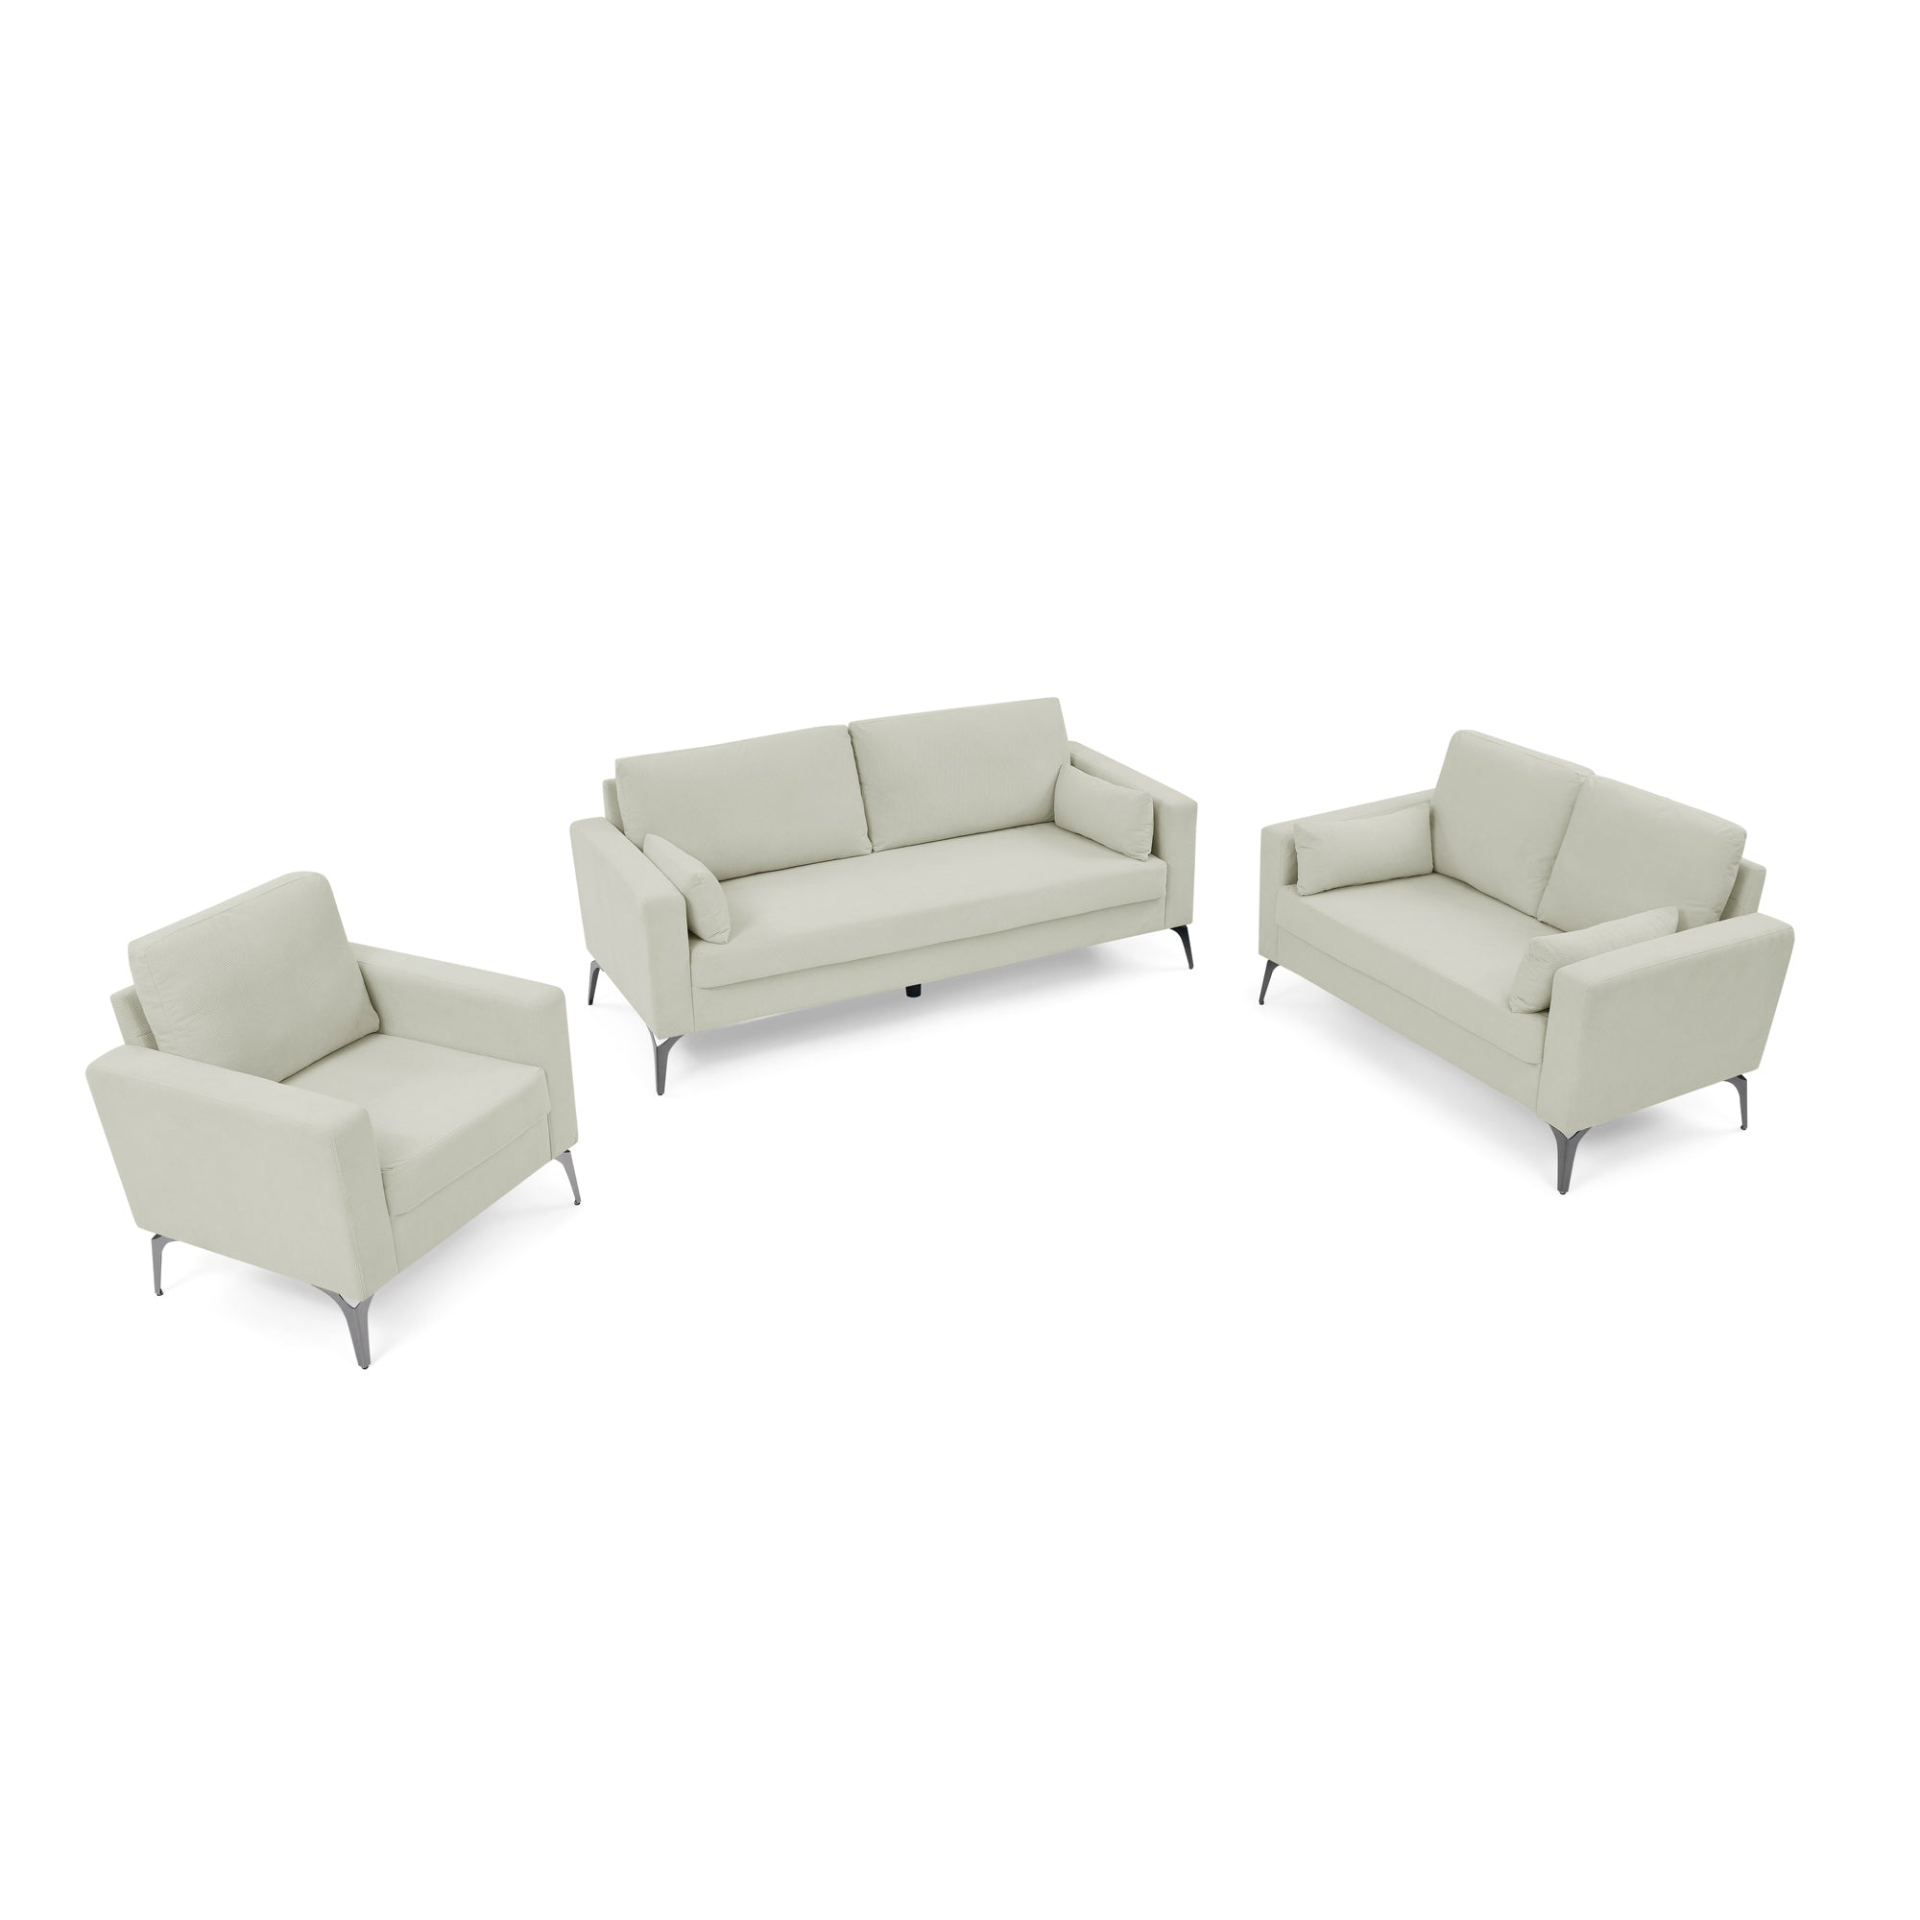 Beige - Classic Corduroy Trio: 3-Piece Living Room Sofa Set With 2 Small Pillows